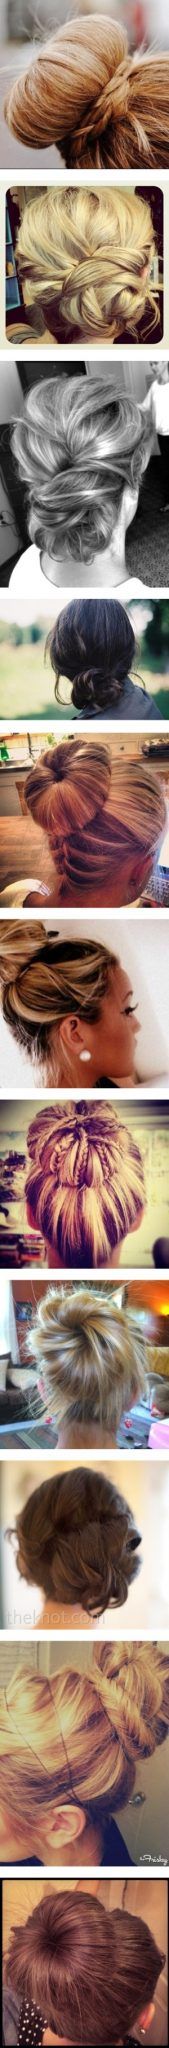 The bun hairstyles